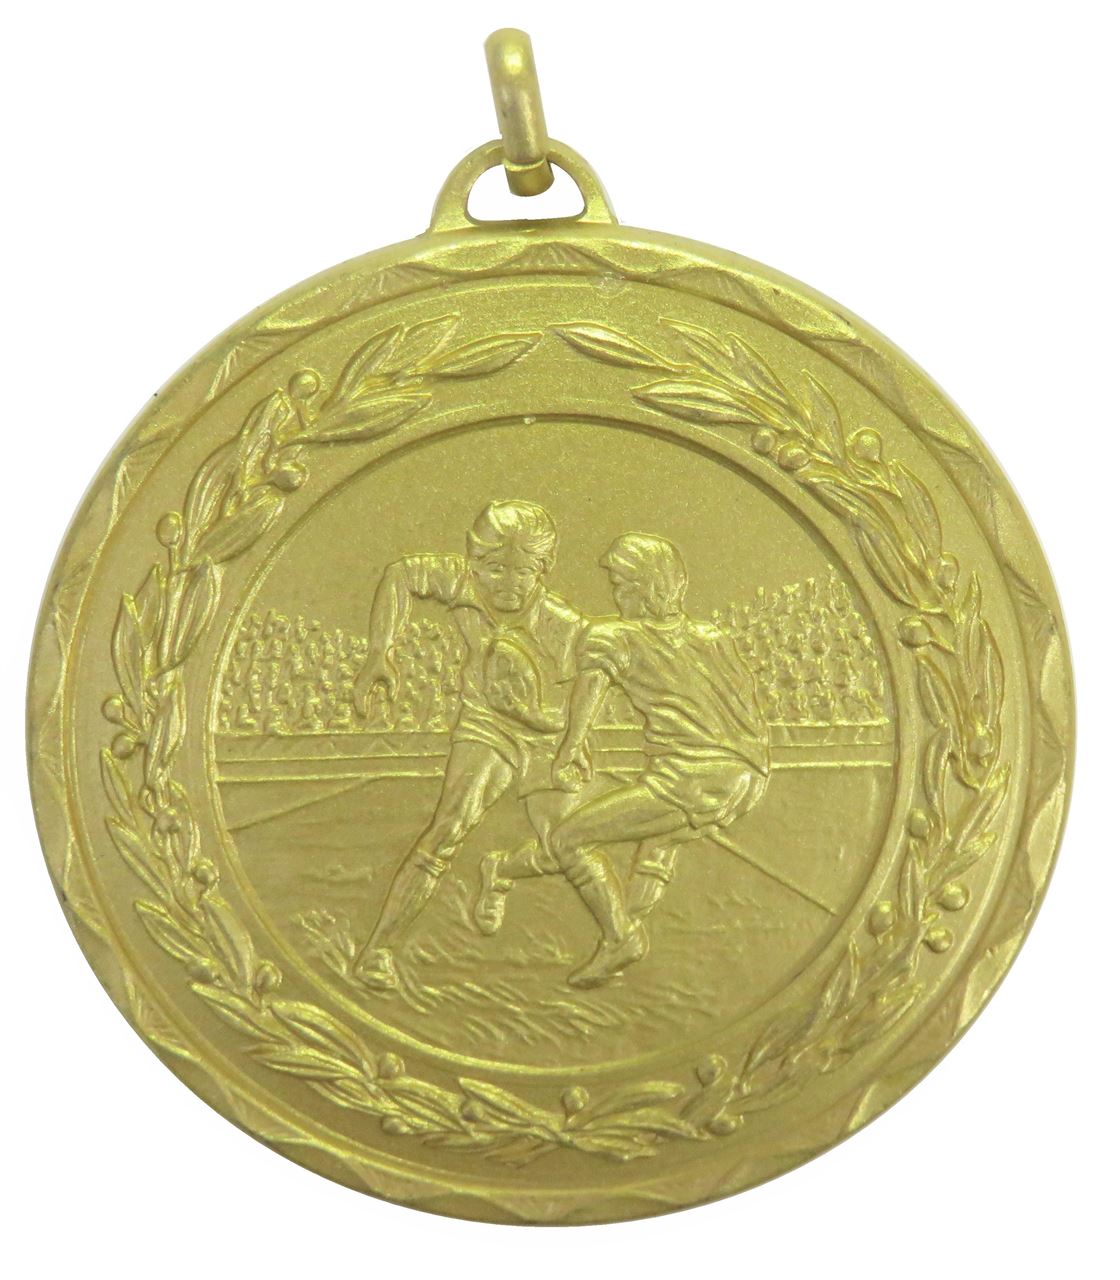 Gold Laurel Economy Rugby Medal (size: 50mm) - 4281E